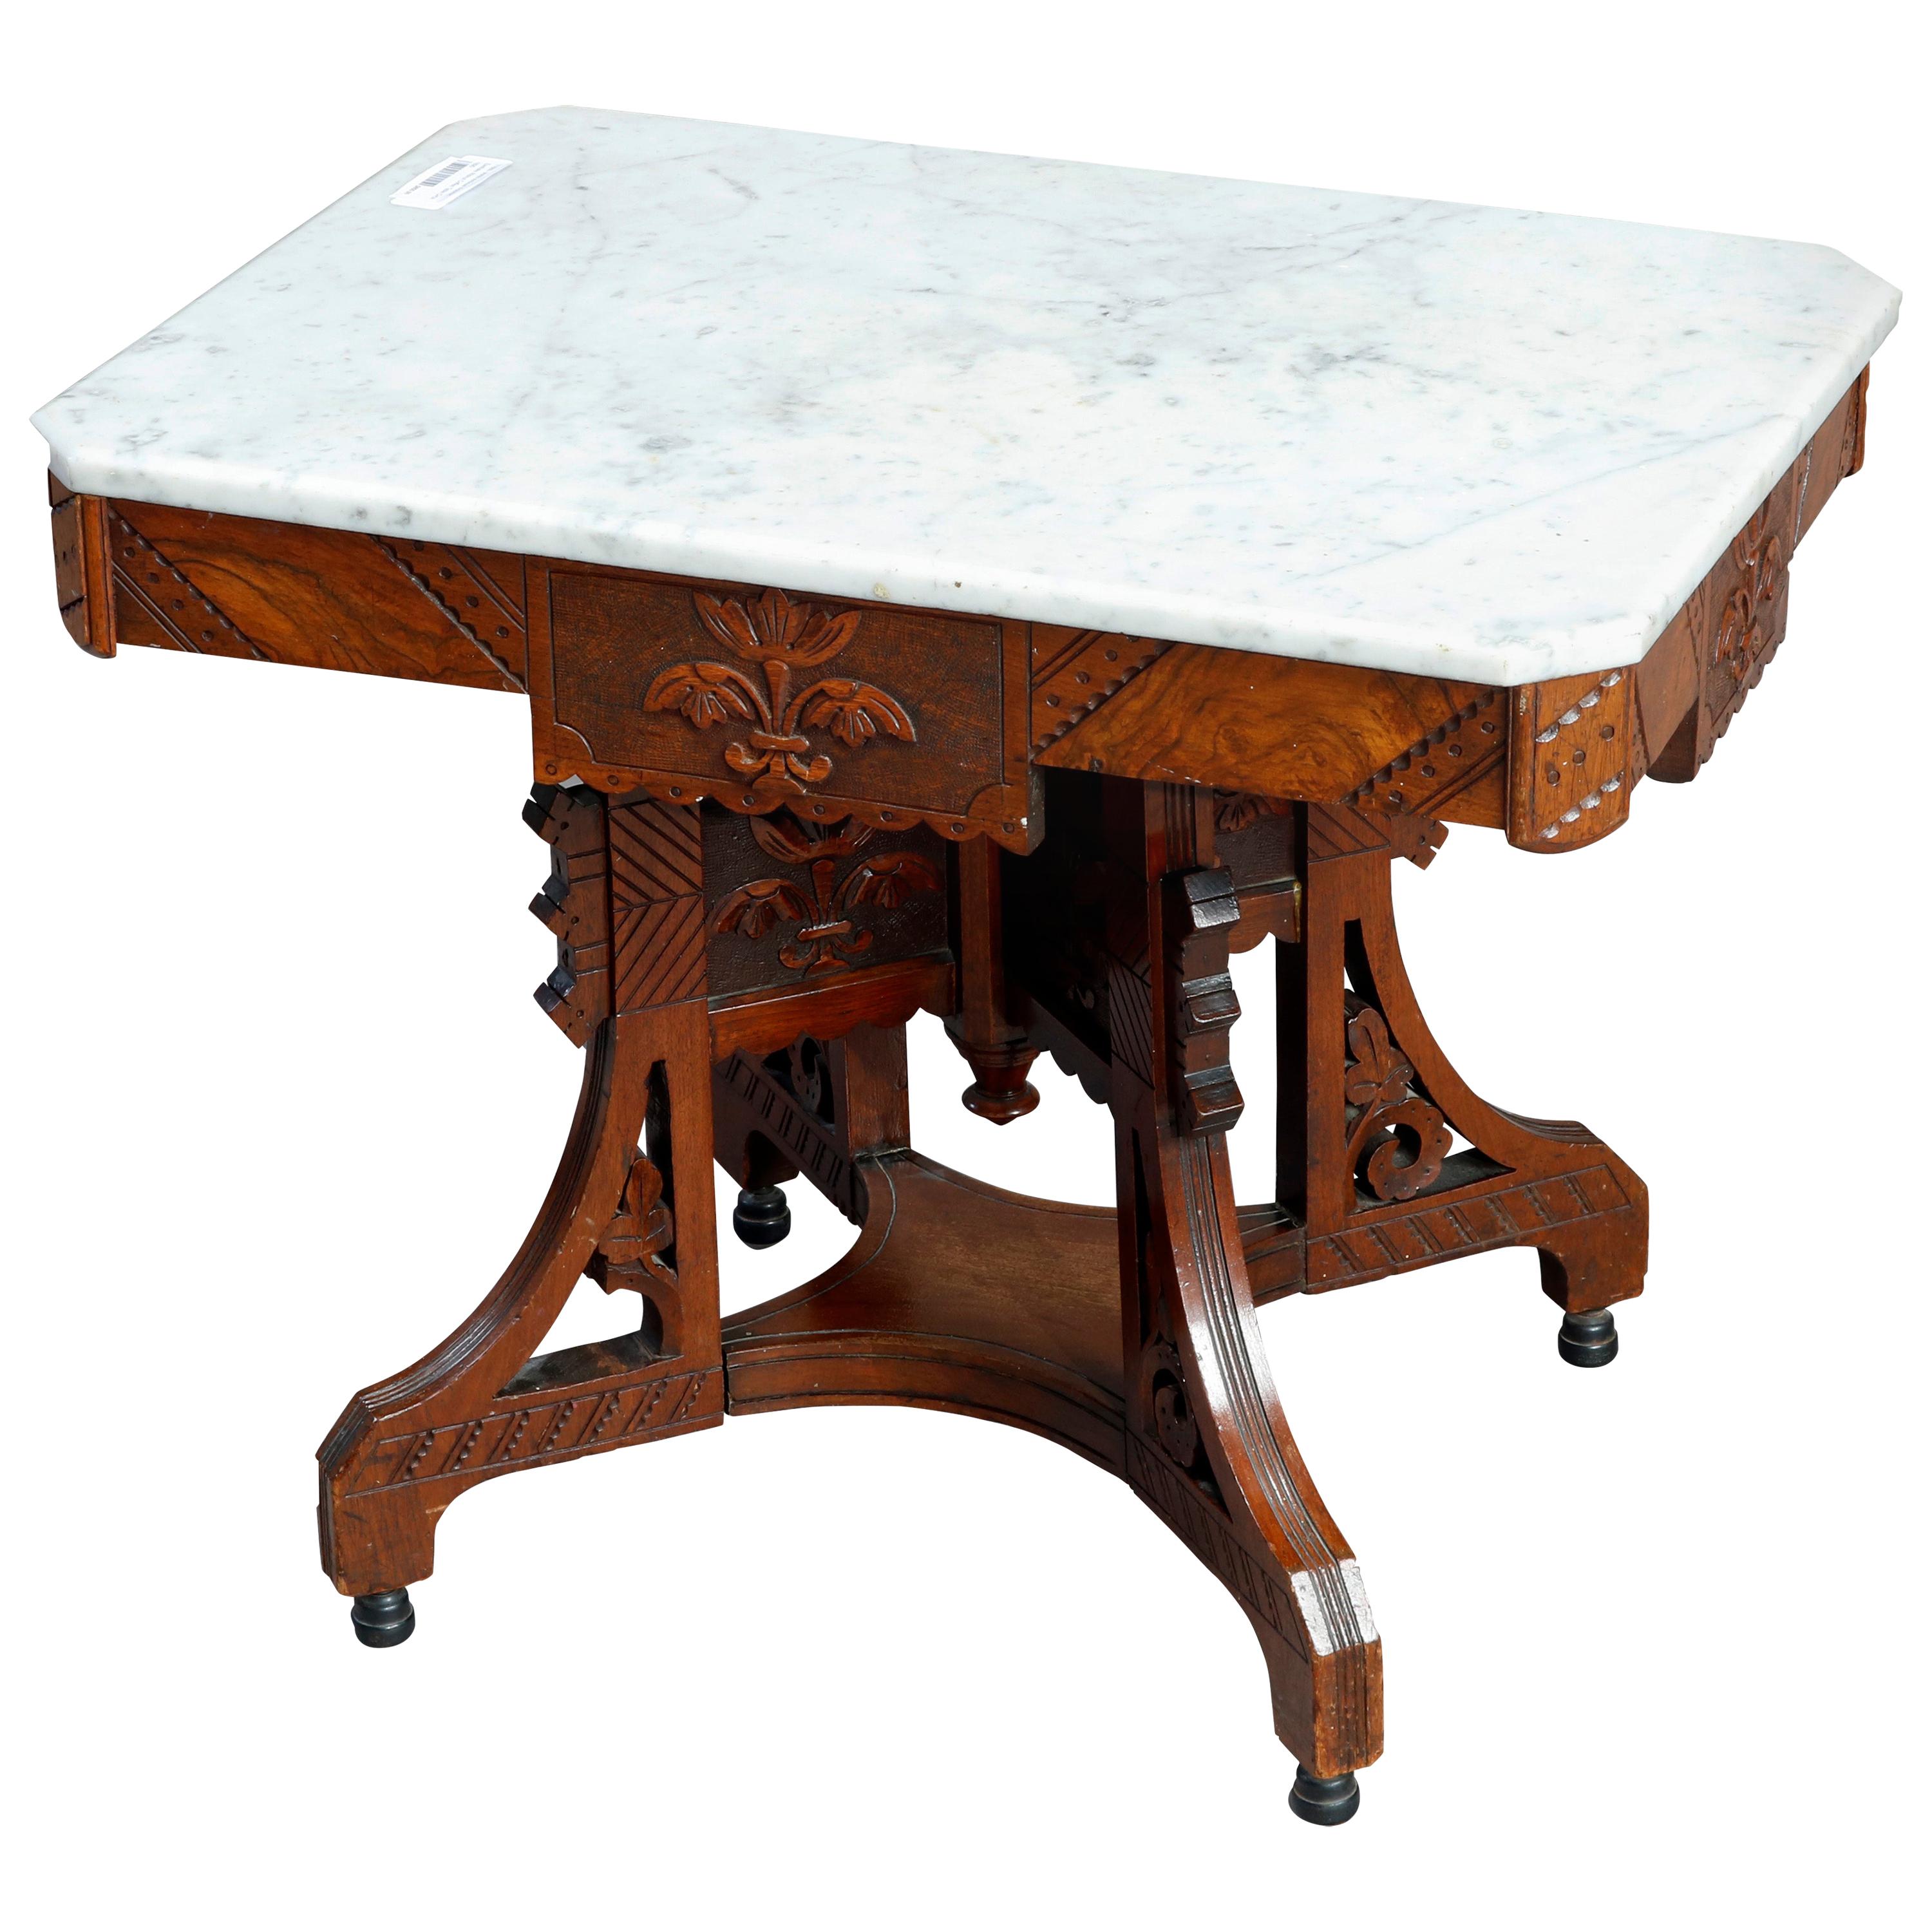 Antique Ornate Eastlake Carved Walnut, Burl & Marble Coffee Table, Circa 1890